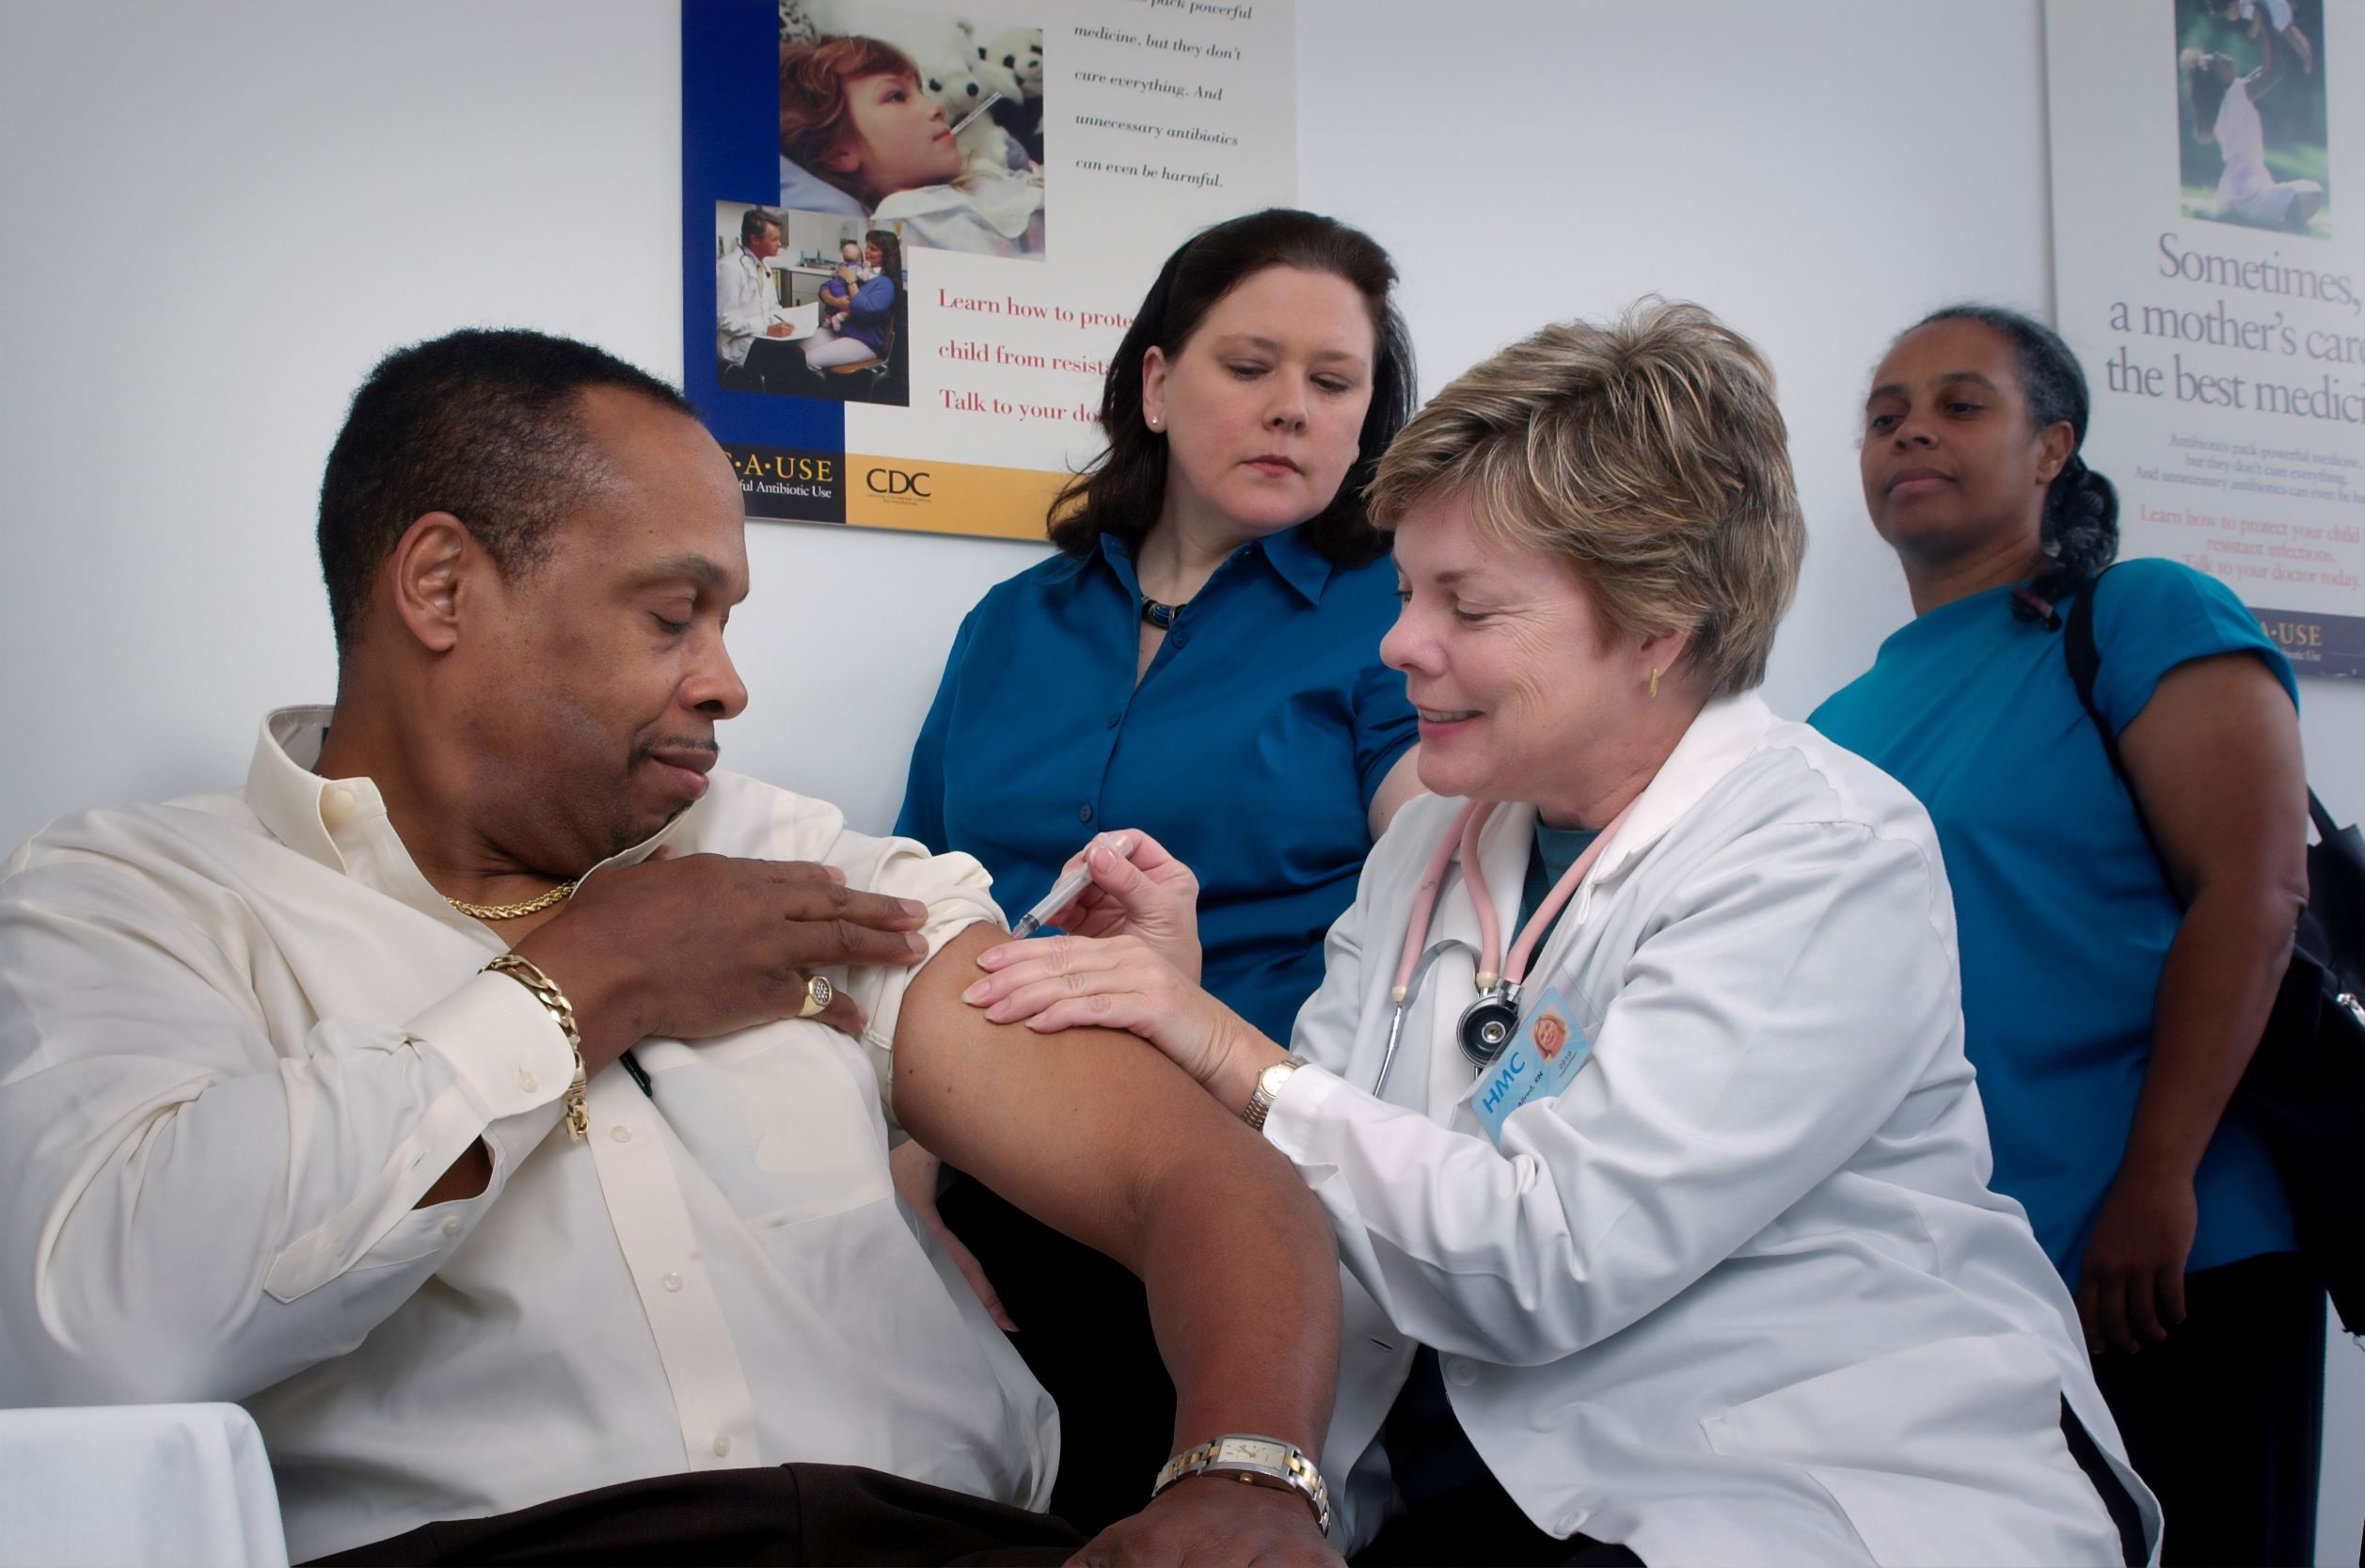 Health nurse giving vaccination to person